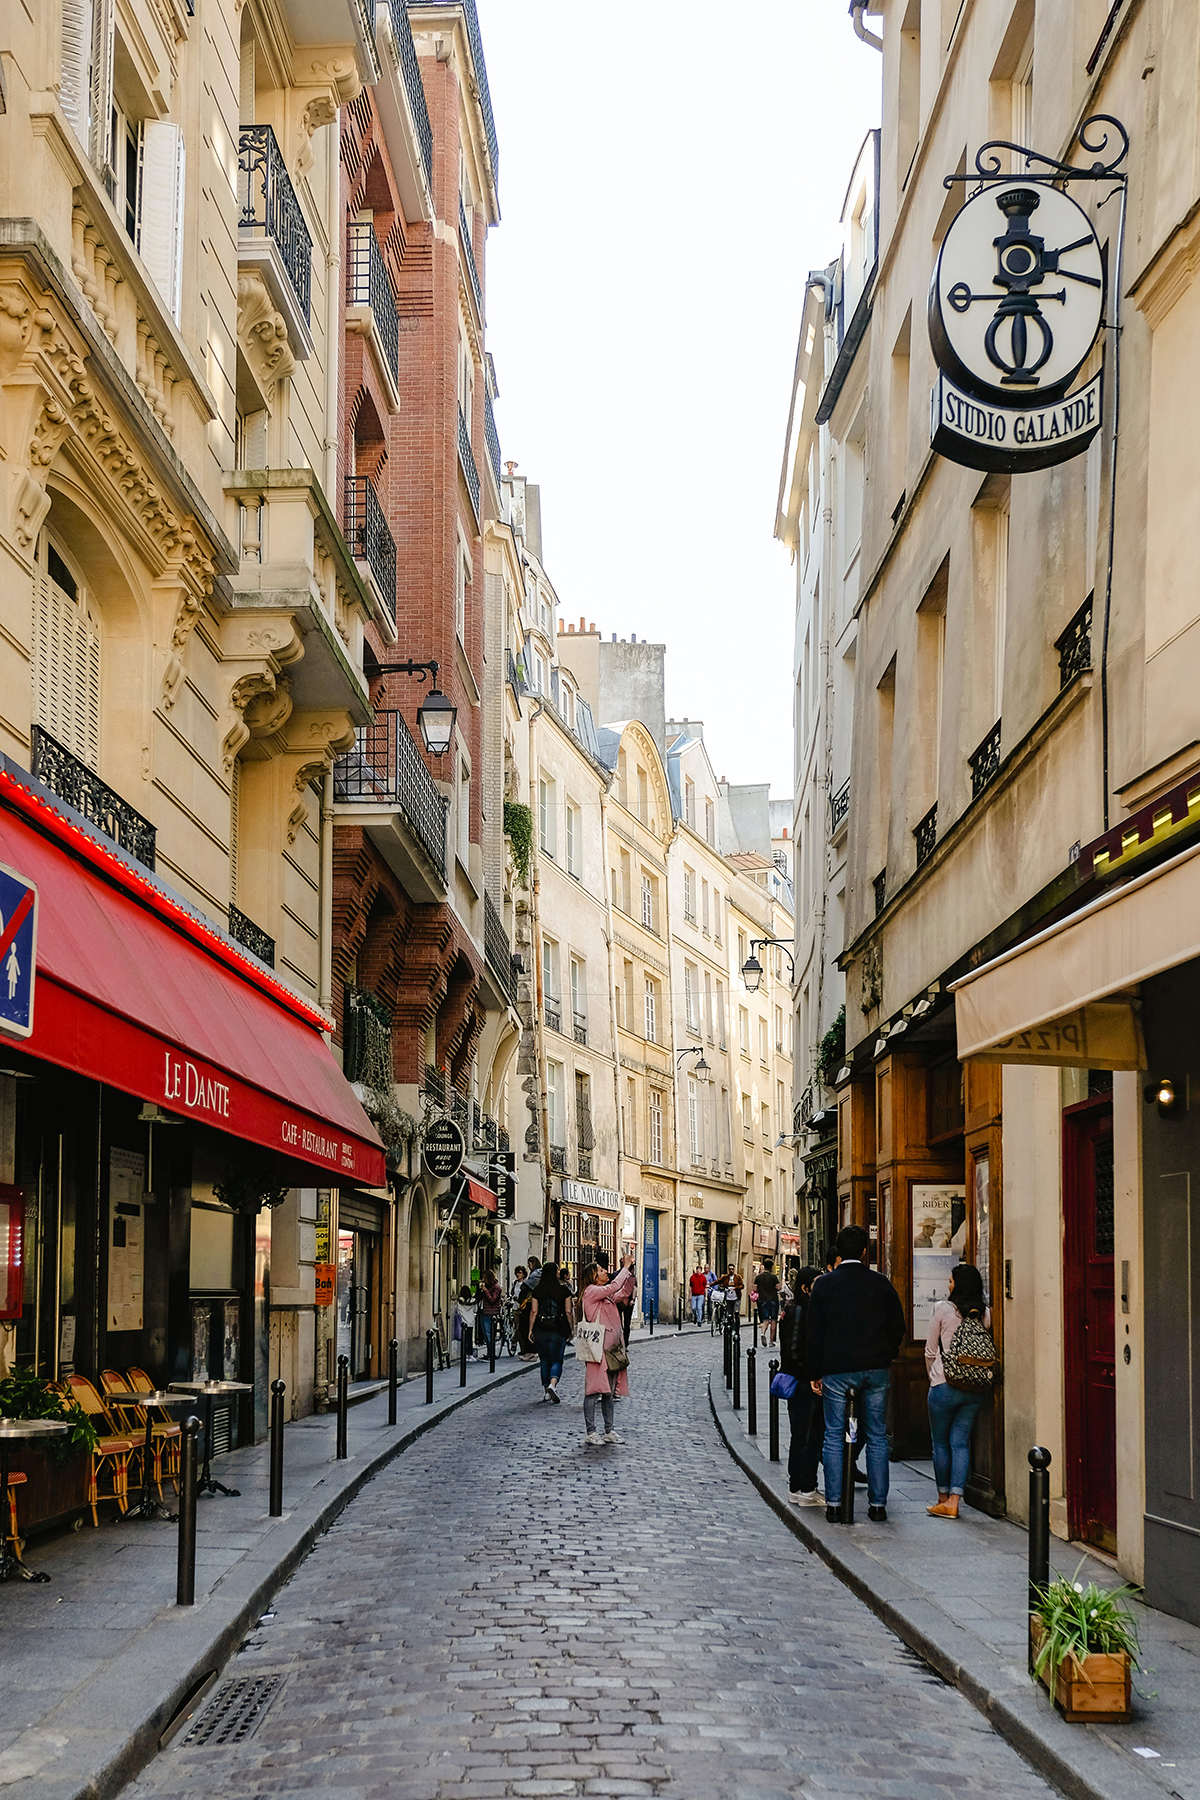 A typical Paris street